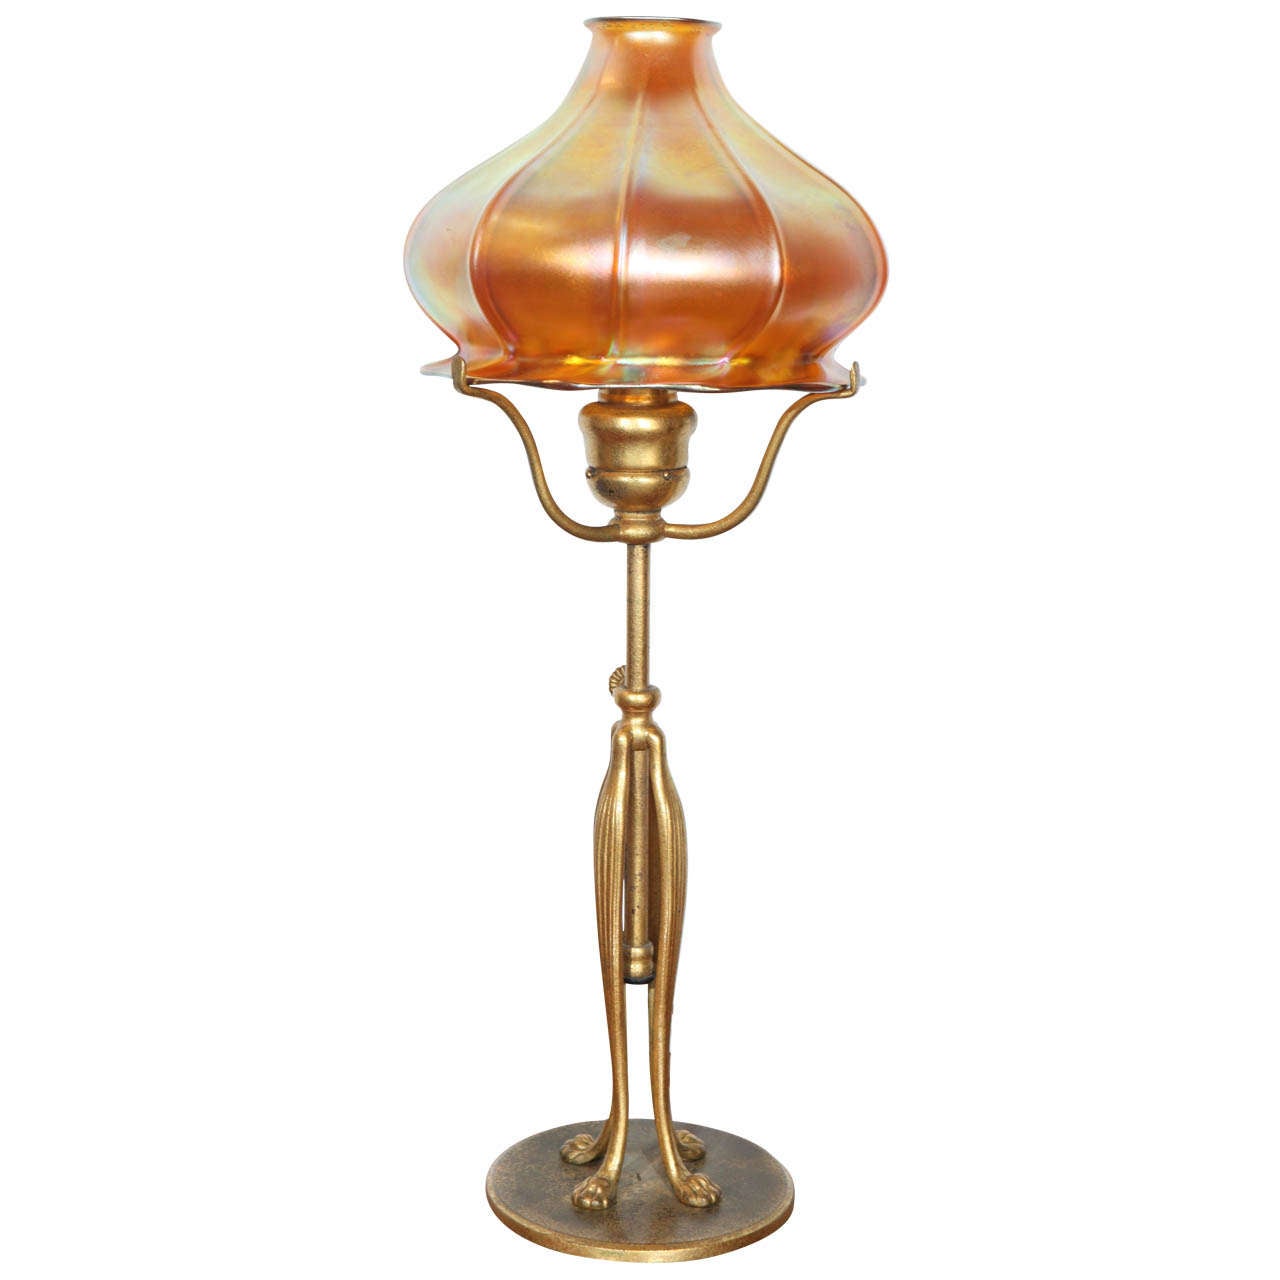 Stunning Tiffany Studios Lamp Base with Quezal Glass Shade